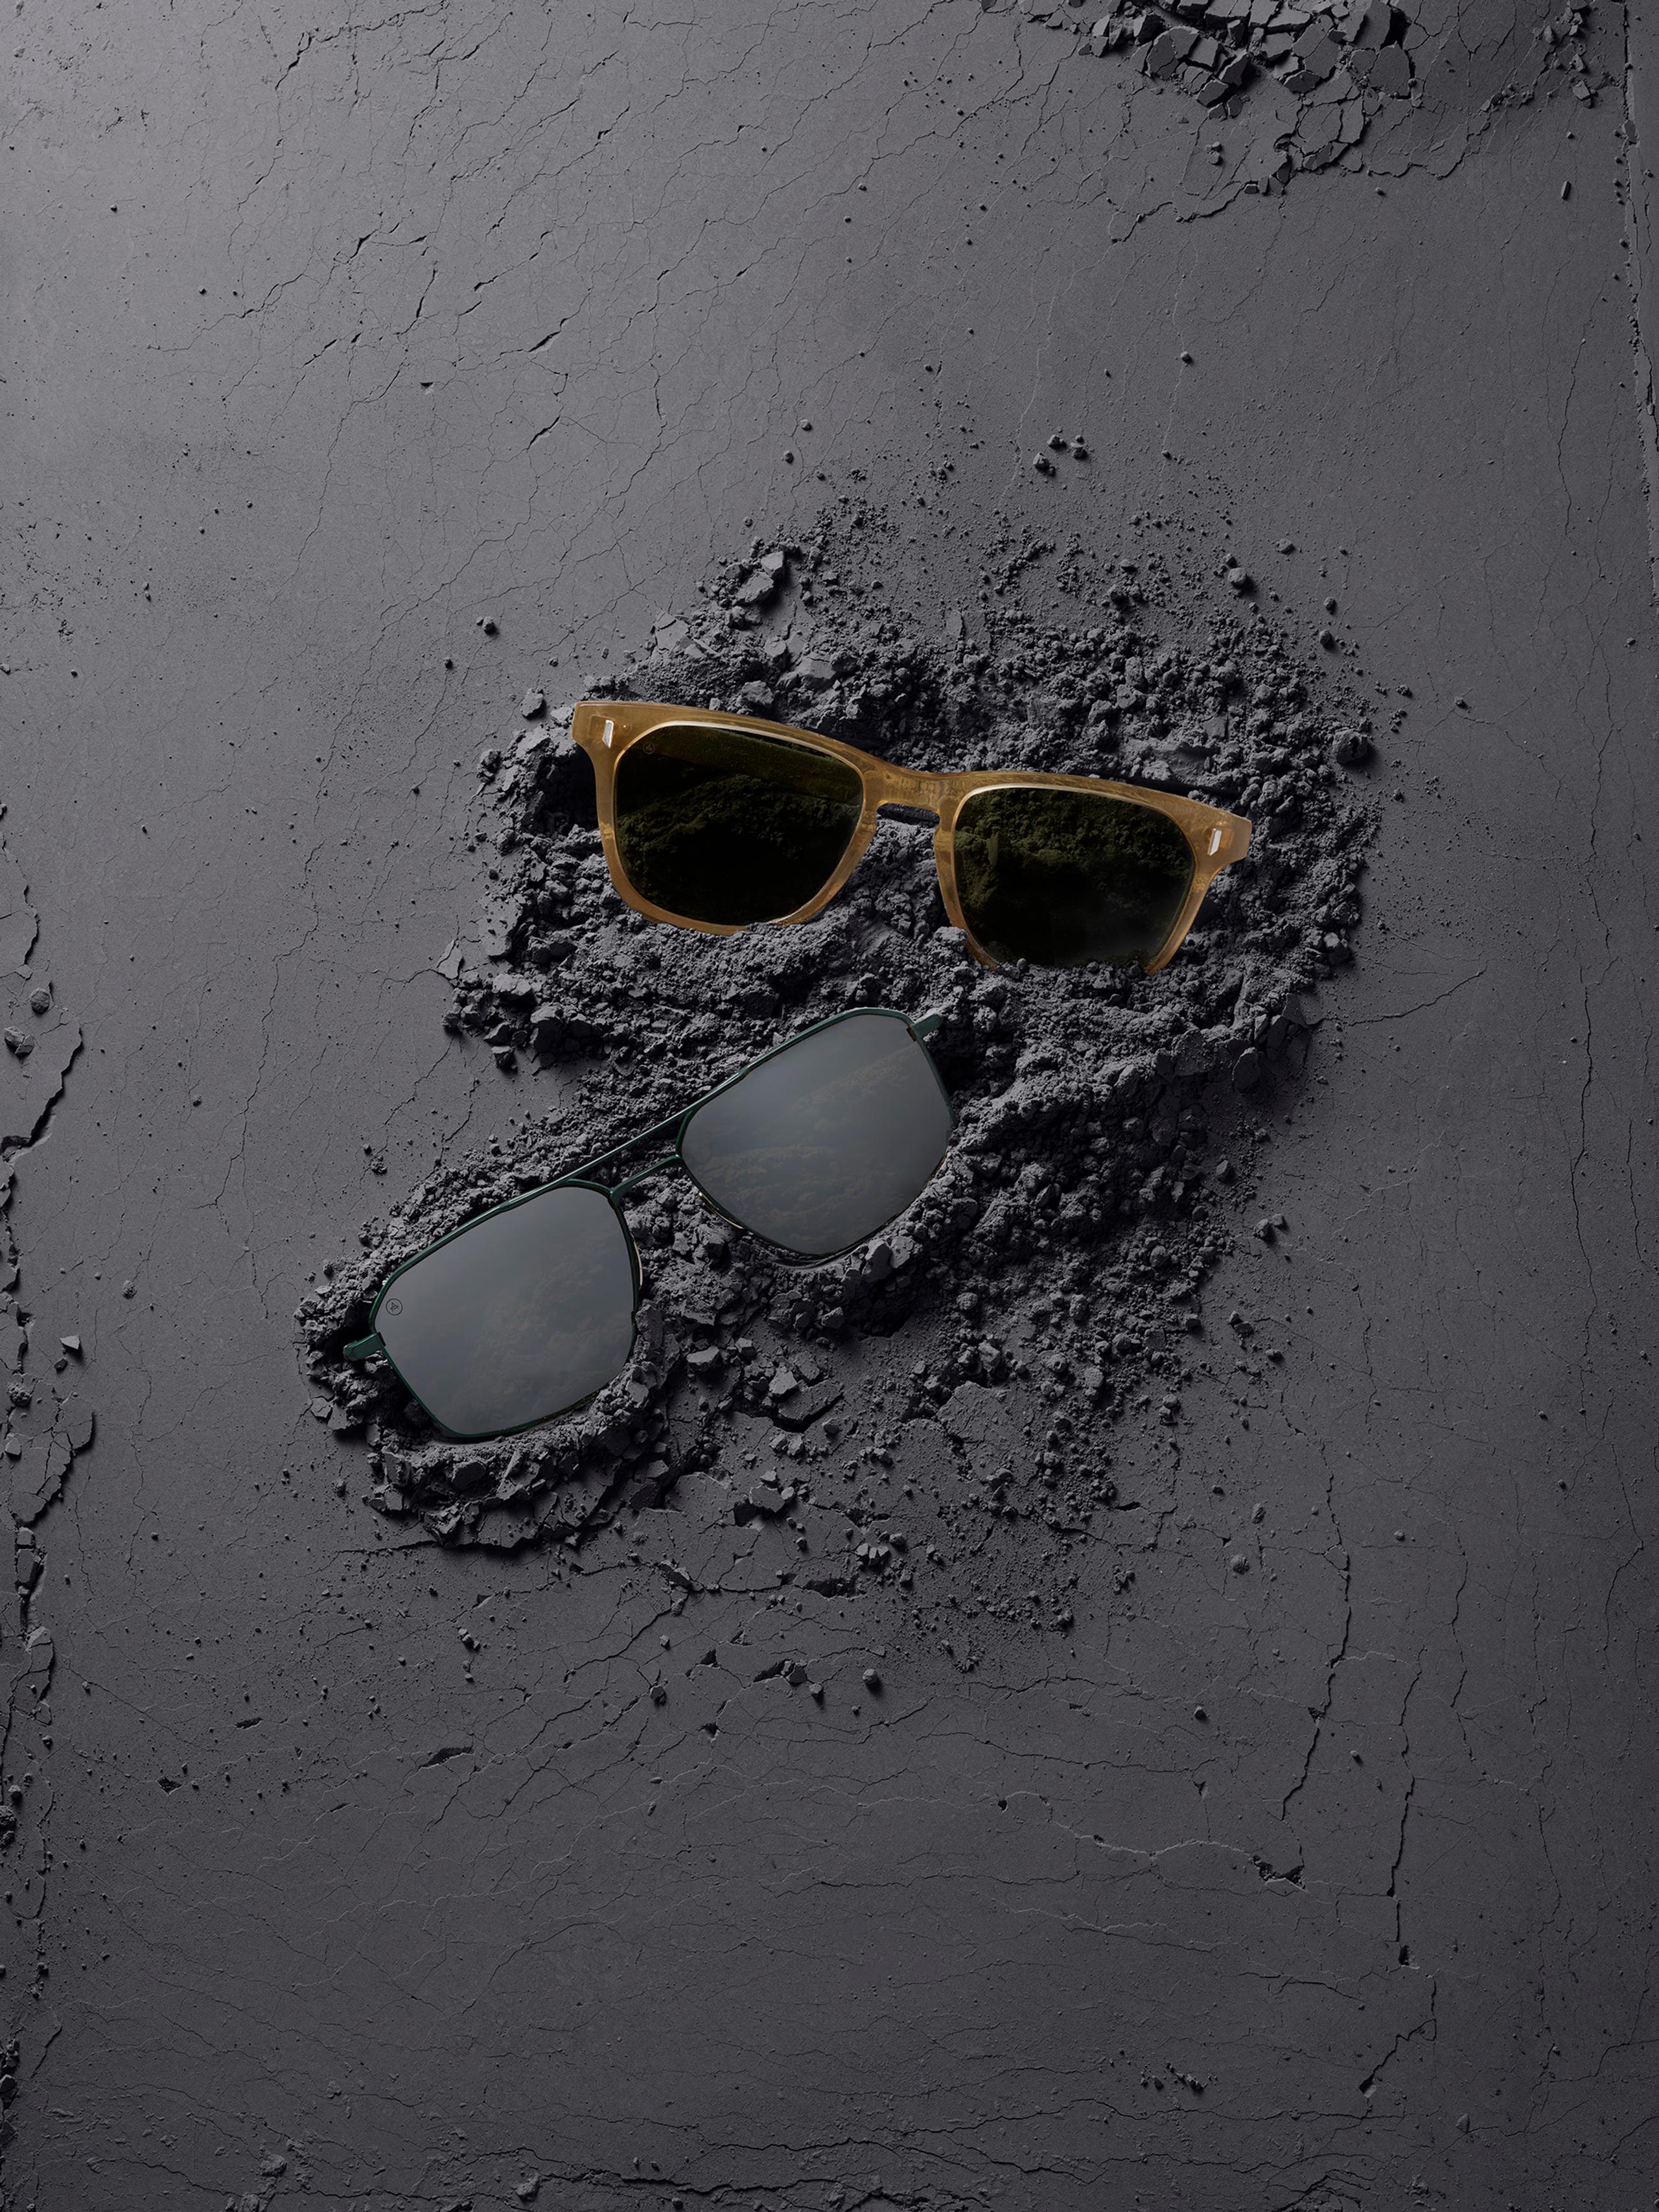 Studio photo of Yosemite and Bryce sunglasses in dark cement material next to photo of woman closing vehicle hatch in desert dunes